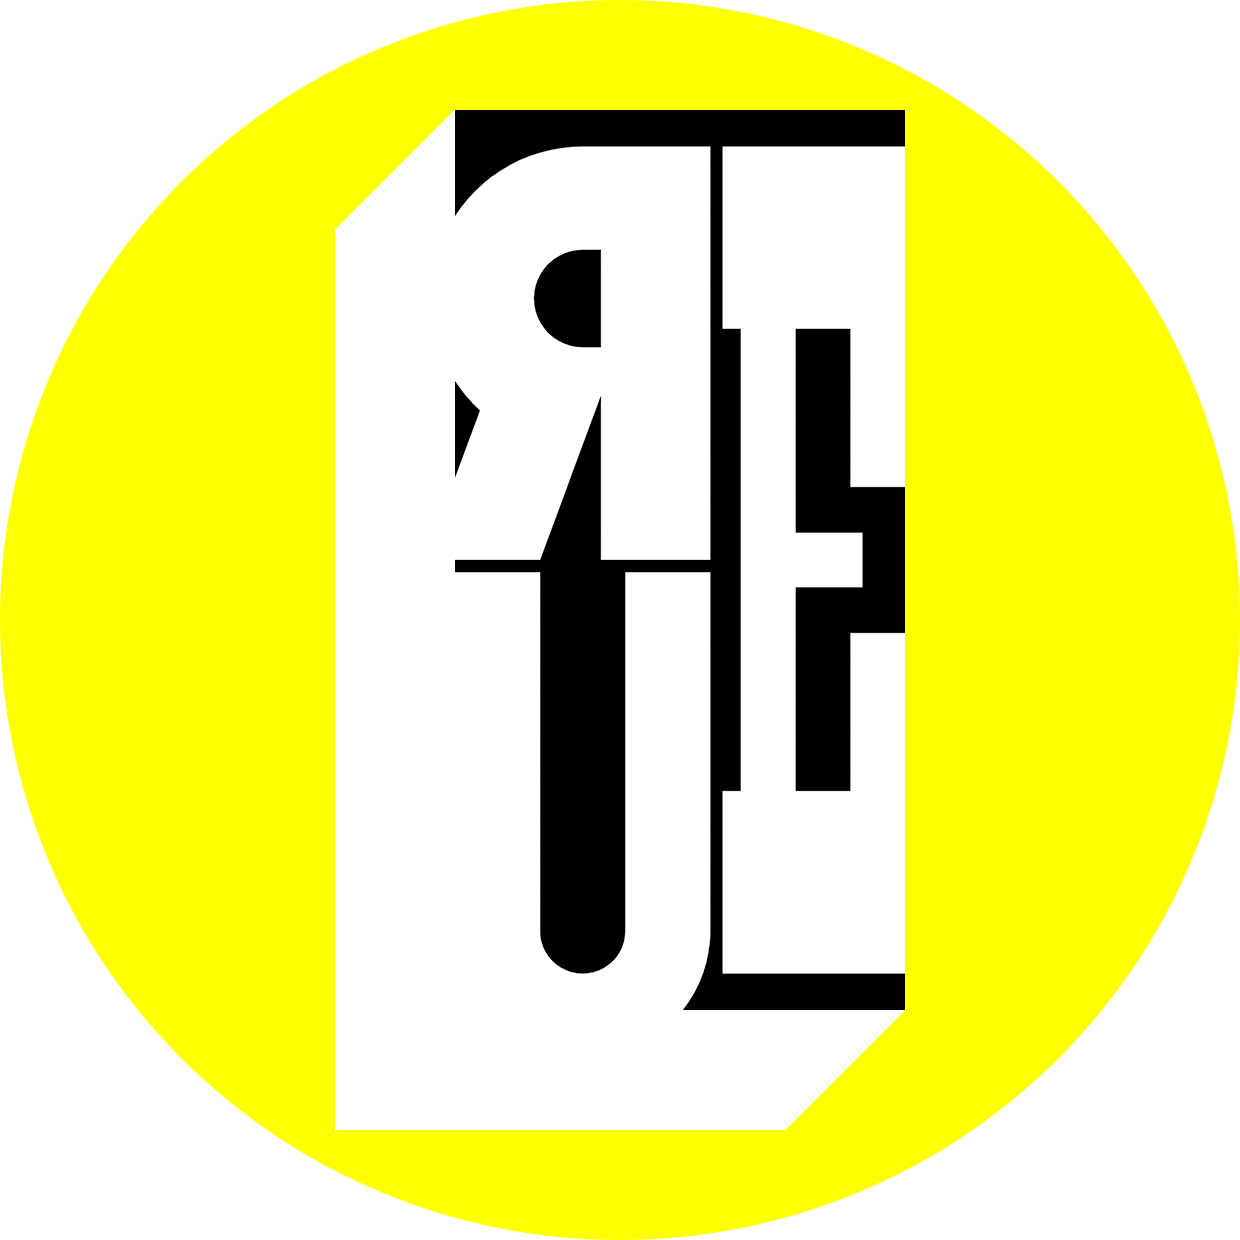 RUE logo yellow